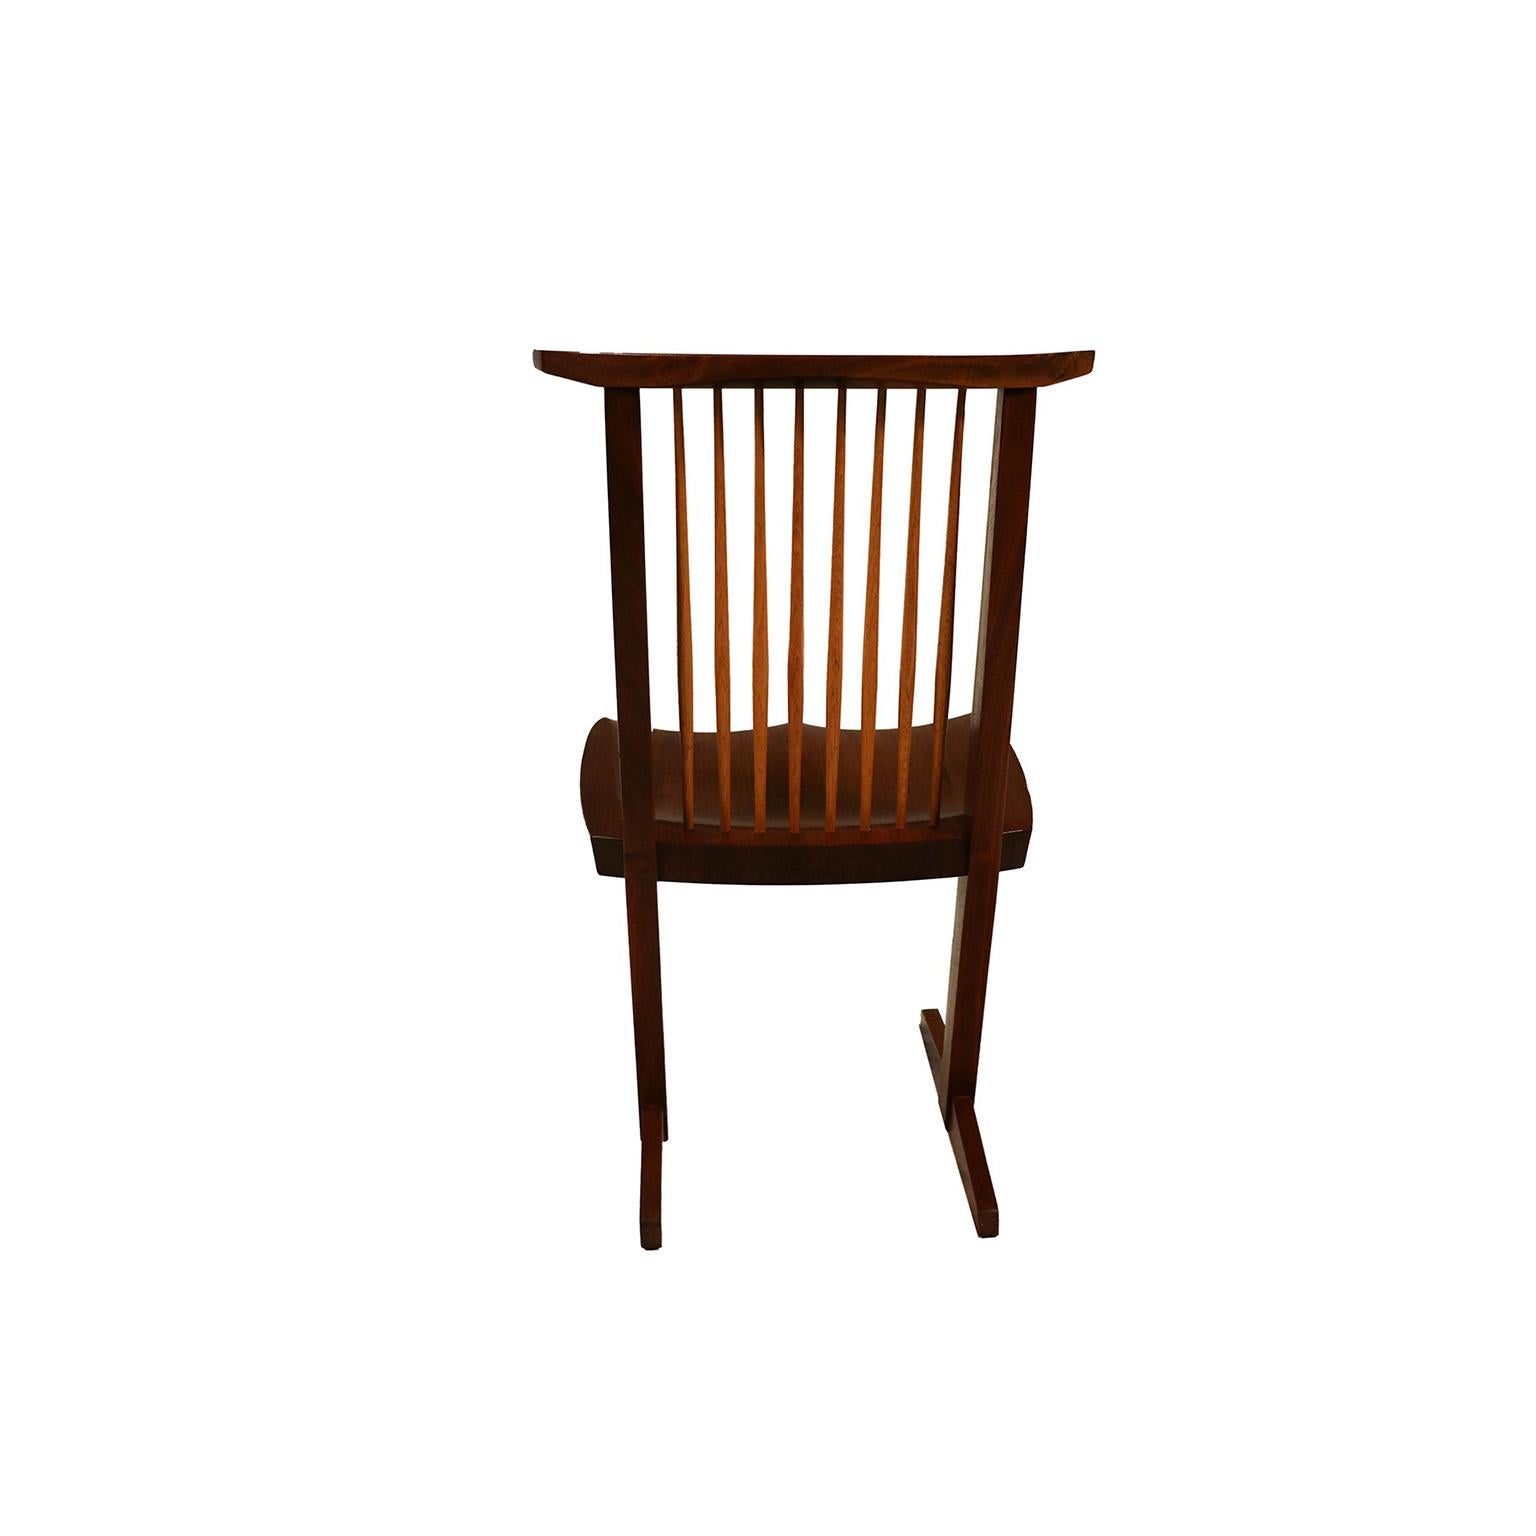 Late 20th Century George Nakashima Conoid Chairs